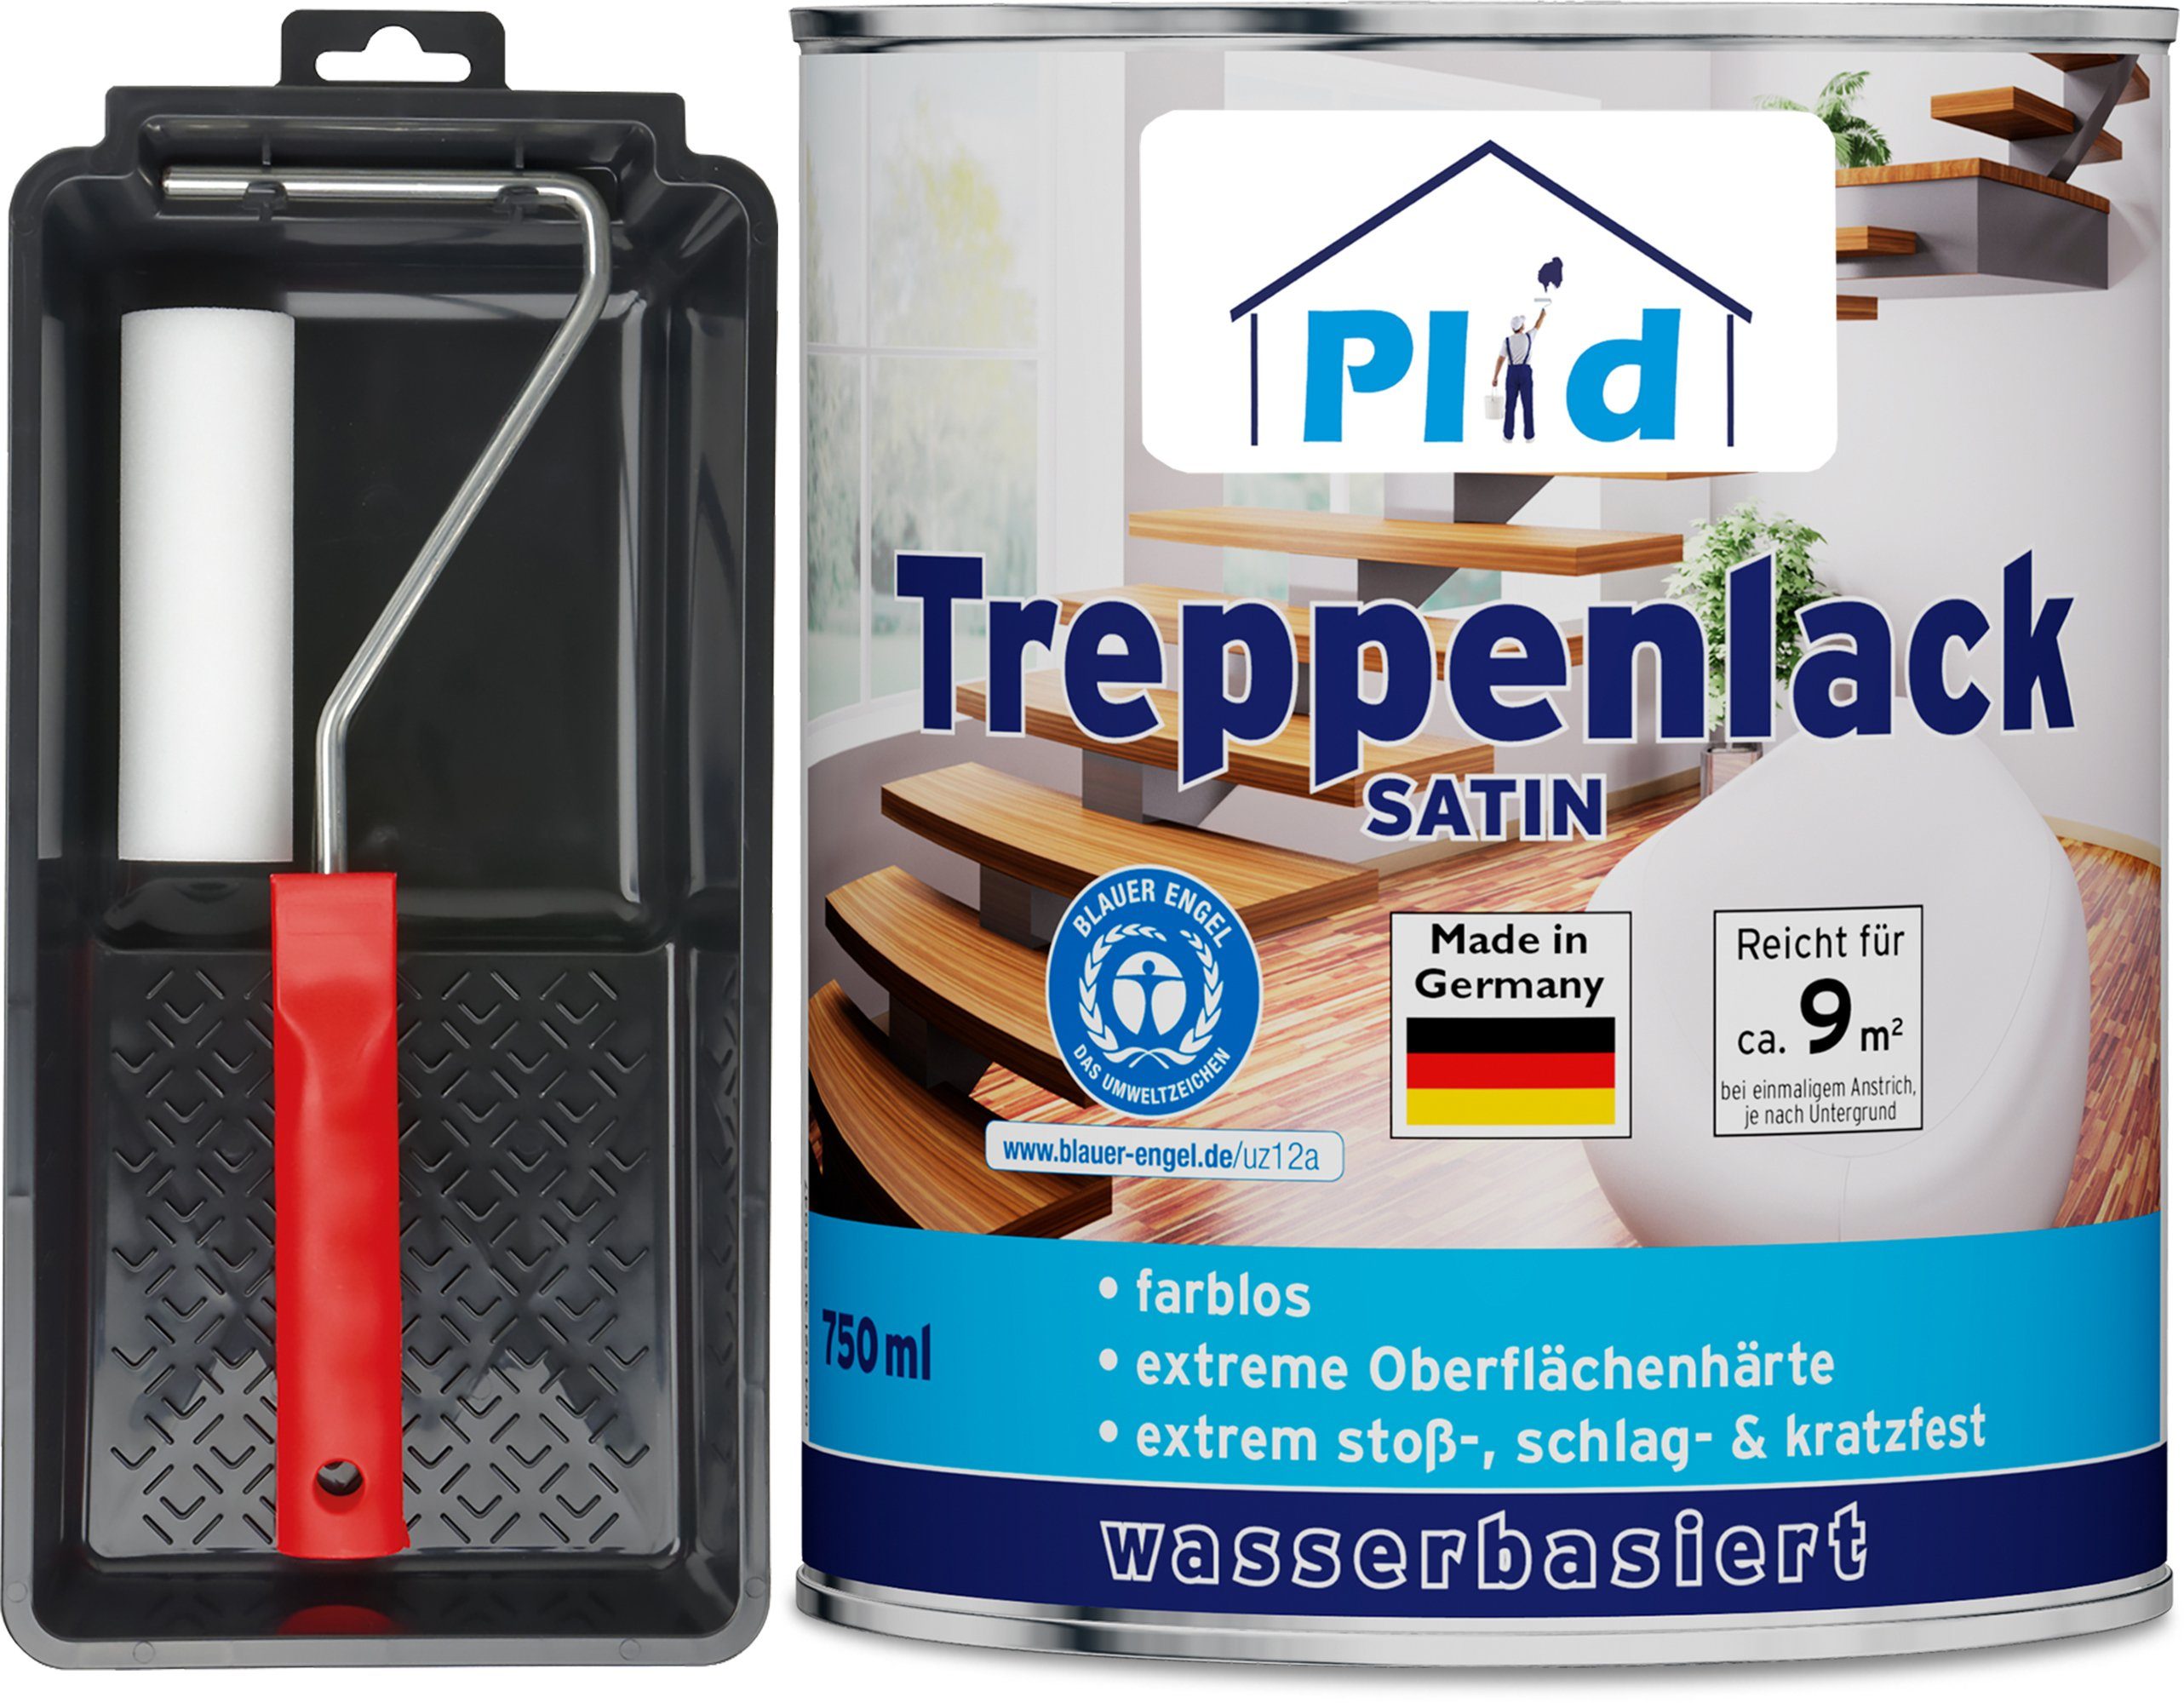 plid Treppen- und Parkettlack Premium Treppenlack Treppensiegel Klarlack Holzsiegel Set, Schnelltrocknend Farblos - Satin | Holzlacke